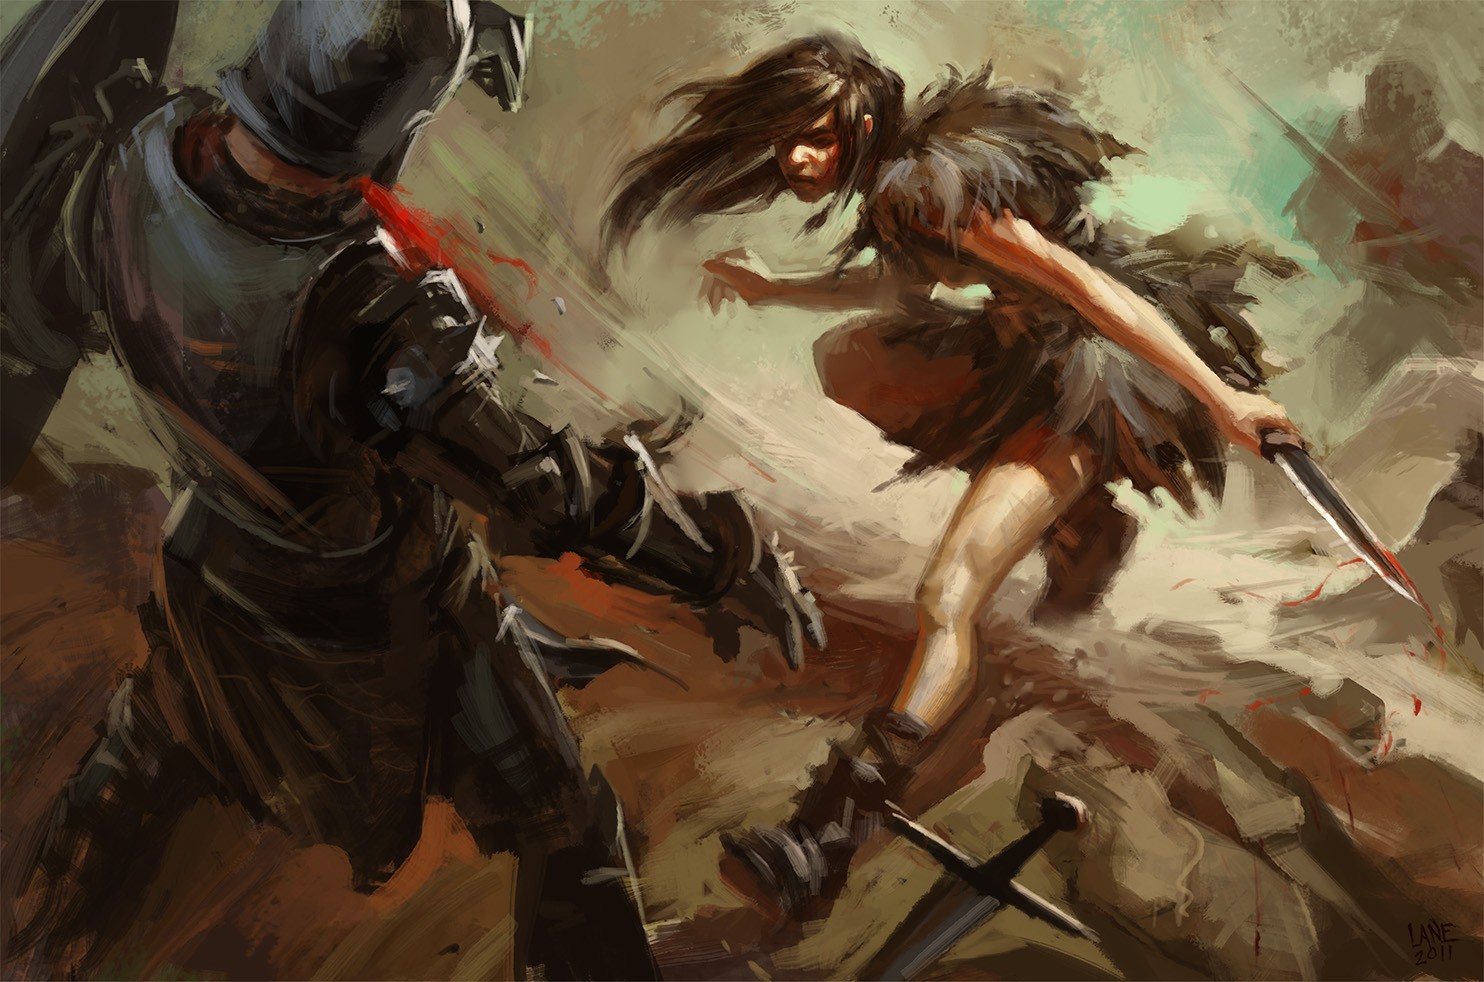 General 1484x982 fantasy art battle blood weapon dark hair armor fantasy girl sword women with swords